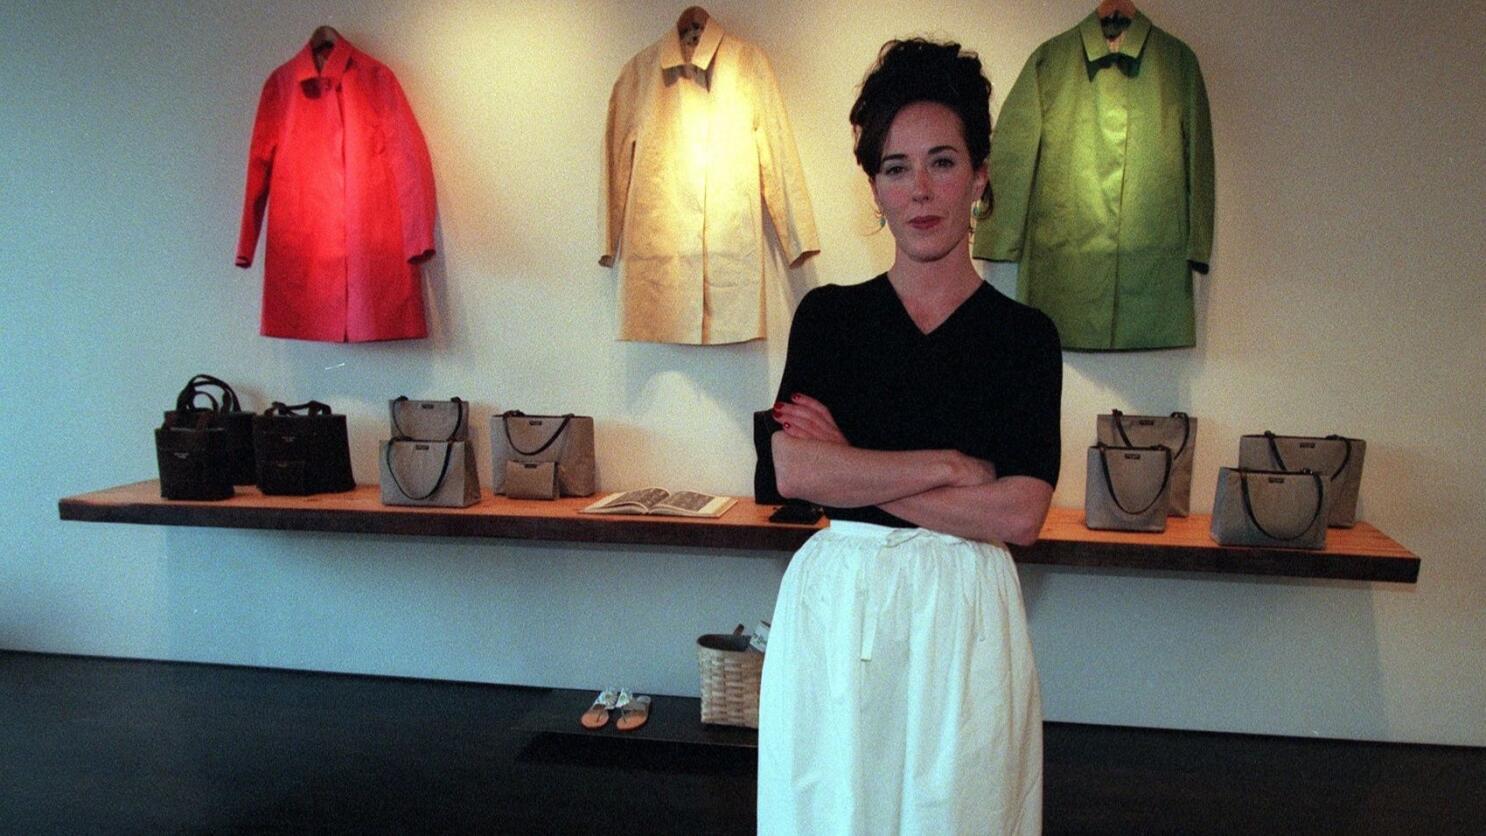 US designer Kate Spade dead at 55 in apparent suicide - Lifestyle